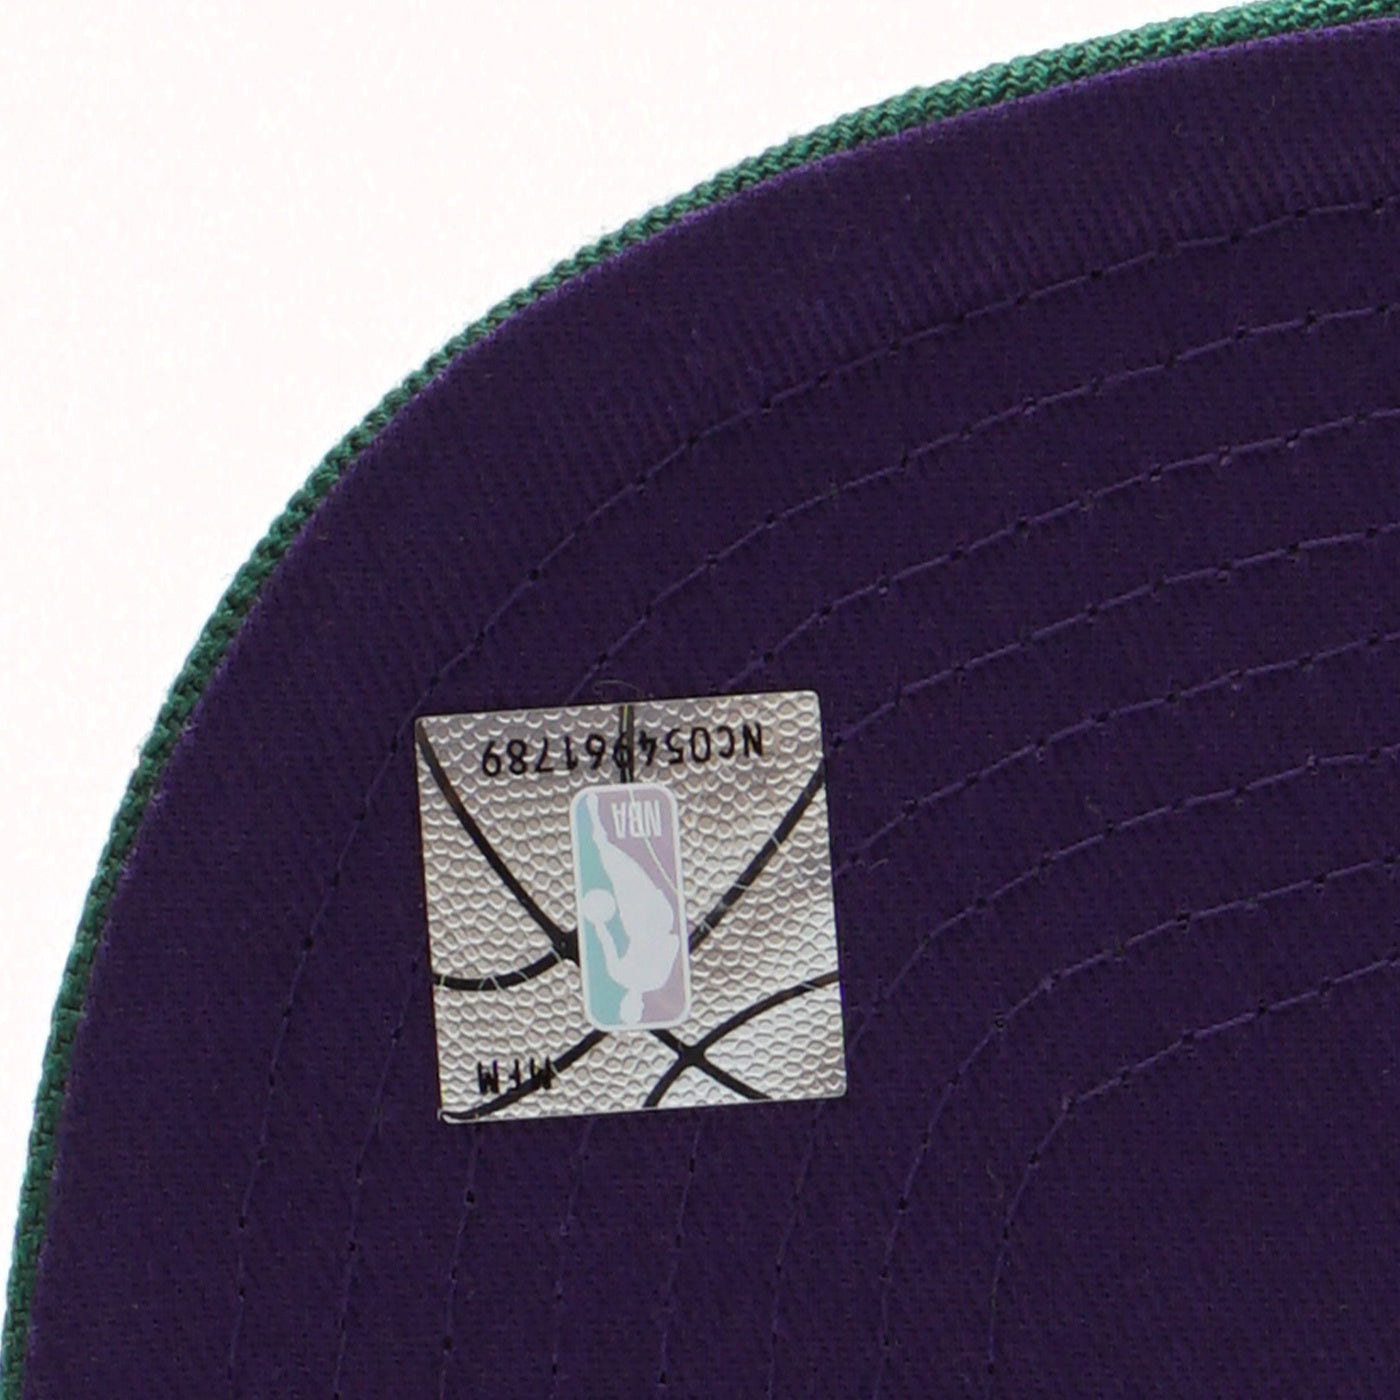 Men's Milwaukee Bucks 2 Tone Purple/ Green Mitchell & Ness NBA Core Basic Hardwood Classics Snapback Adjustable Hat